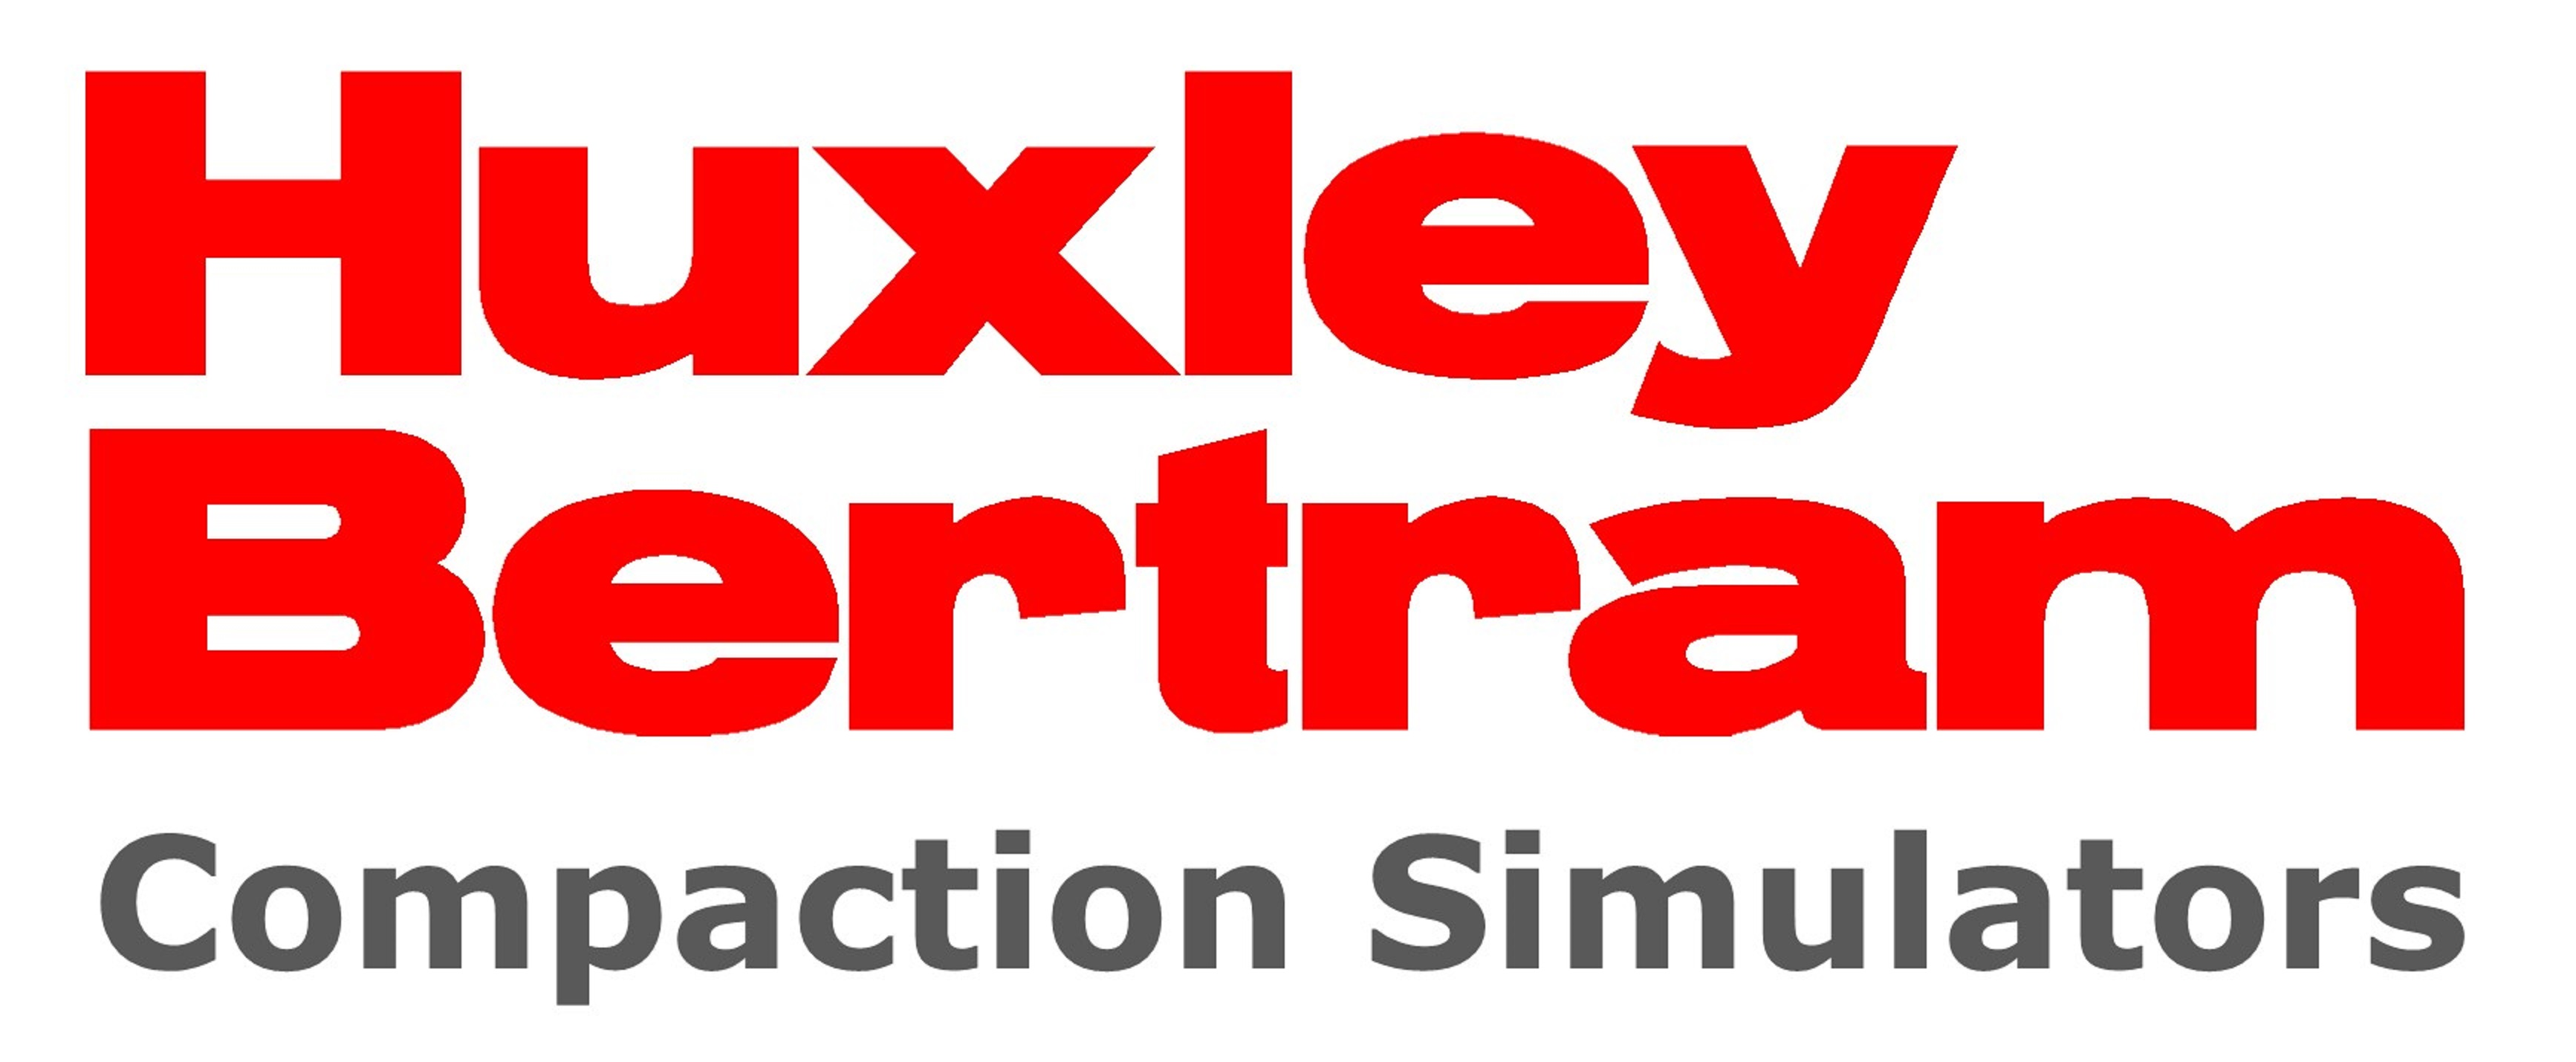 Huxley Bertram Powder Compaction solutions